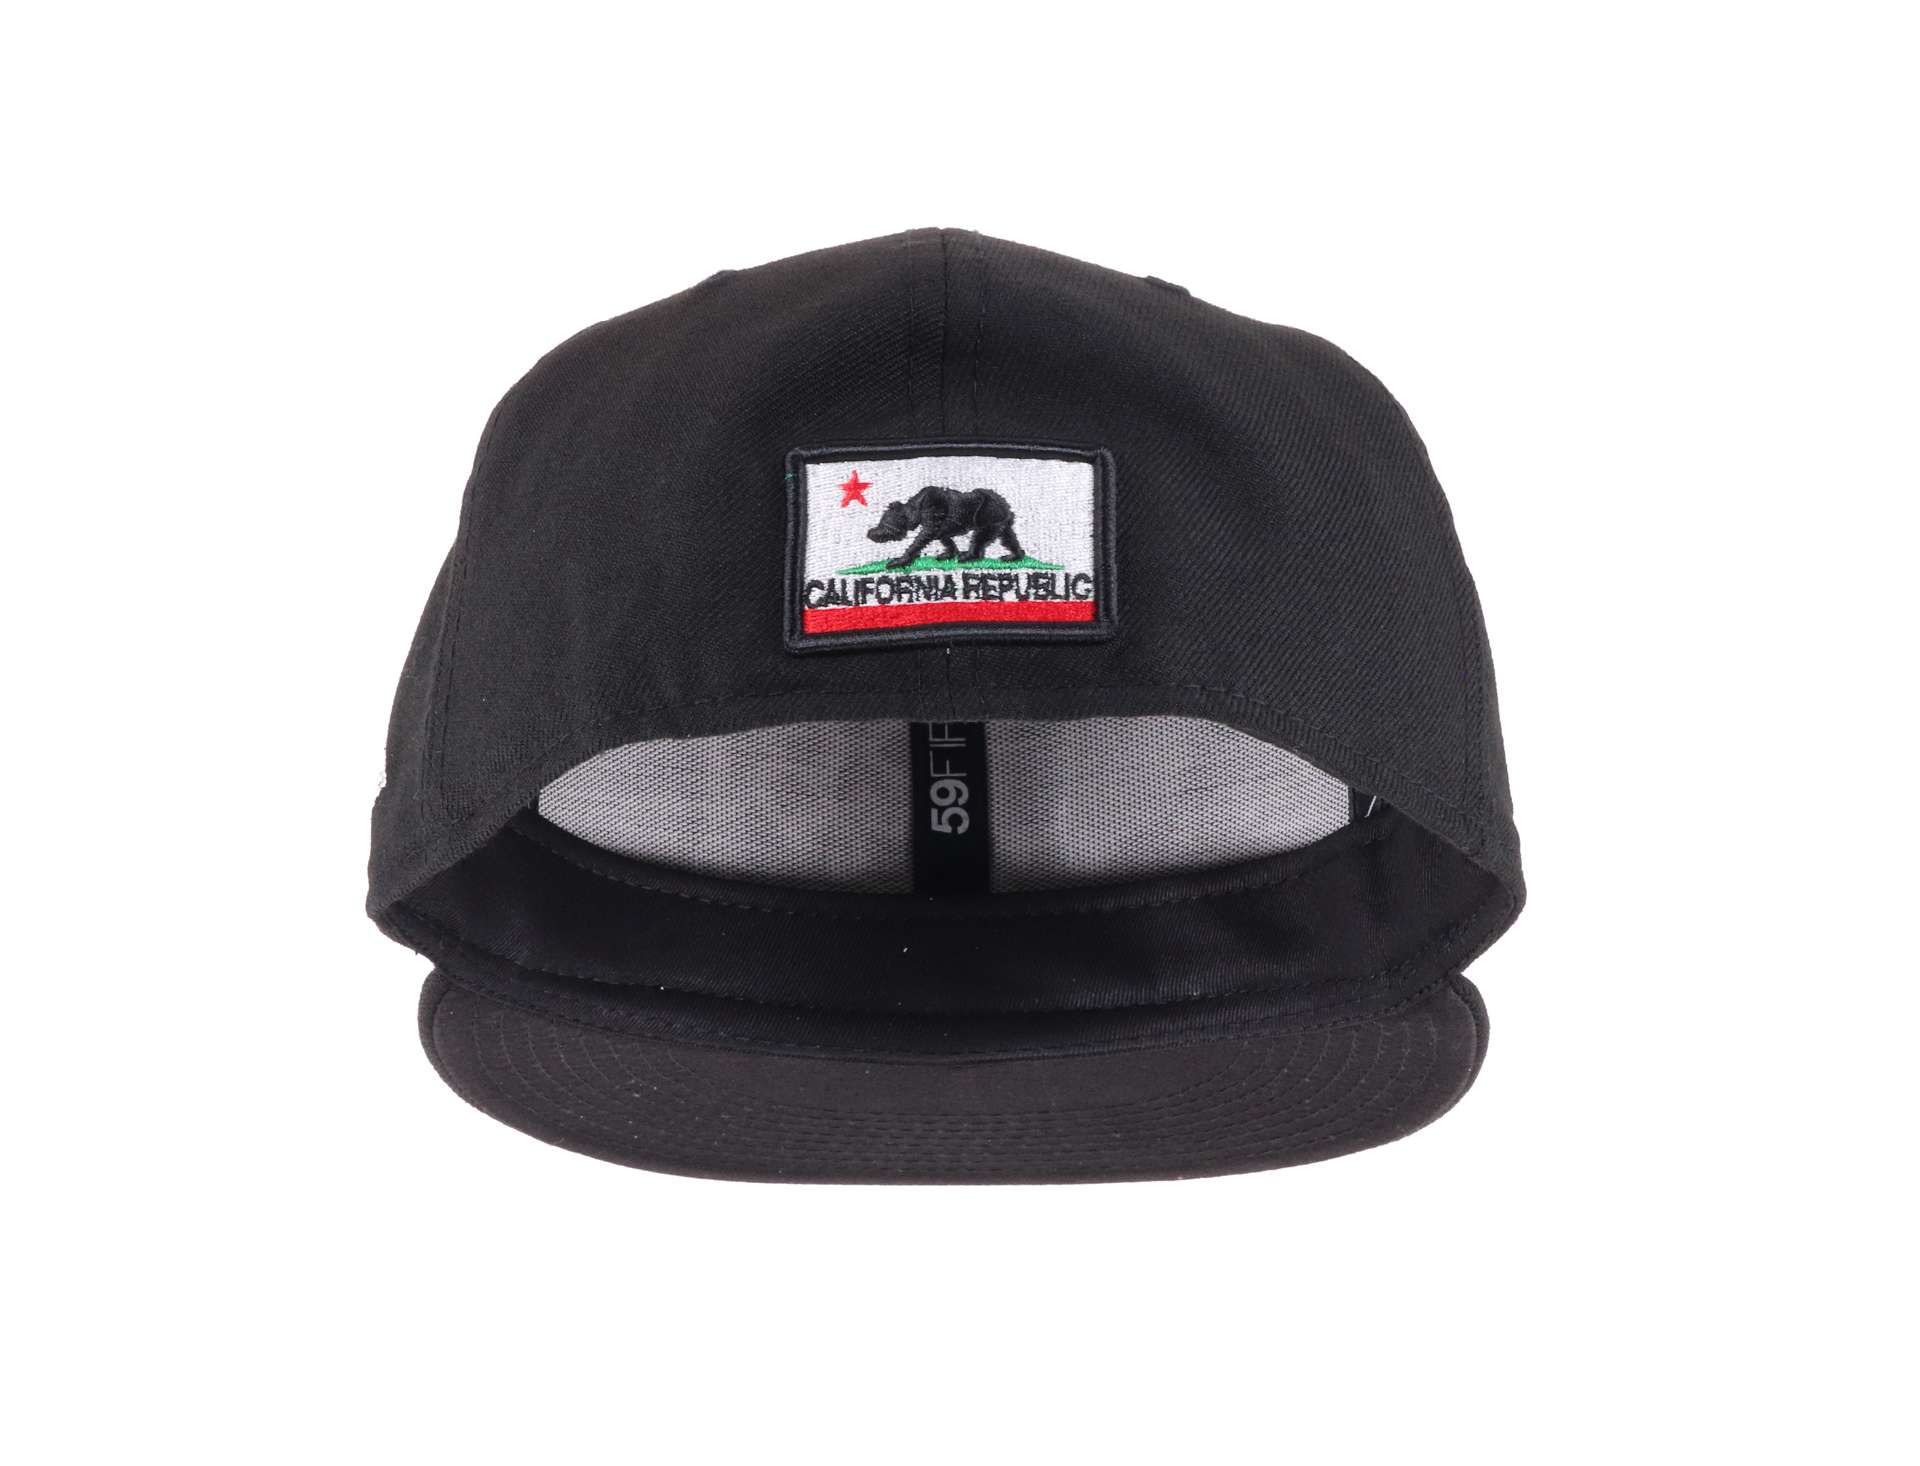 West Coast California Republic Black 59Fifty Cap New Era